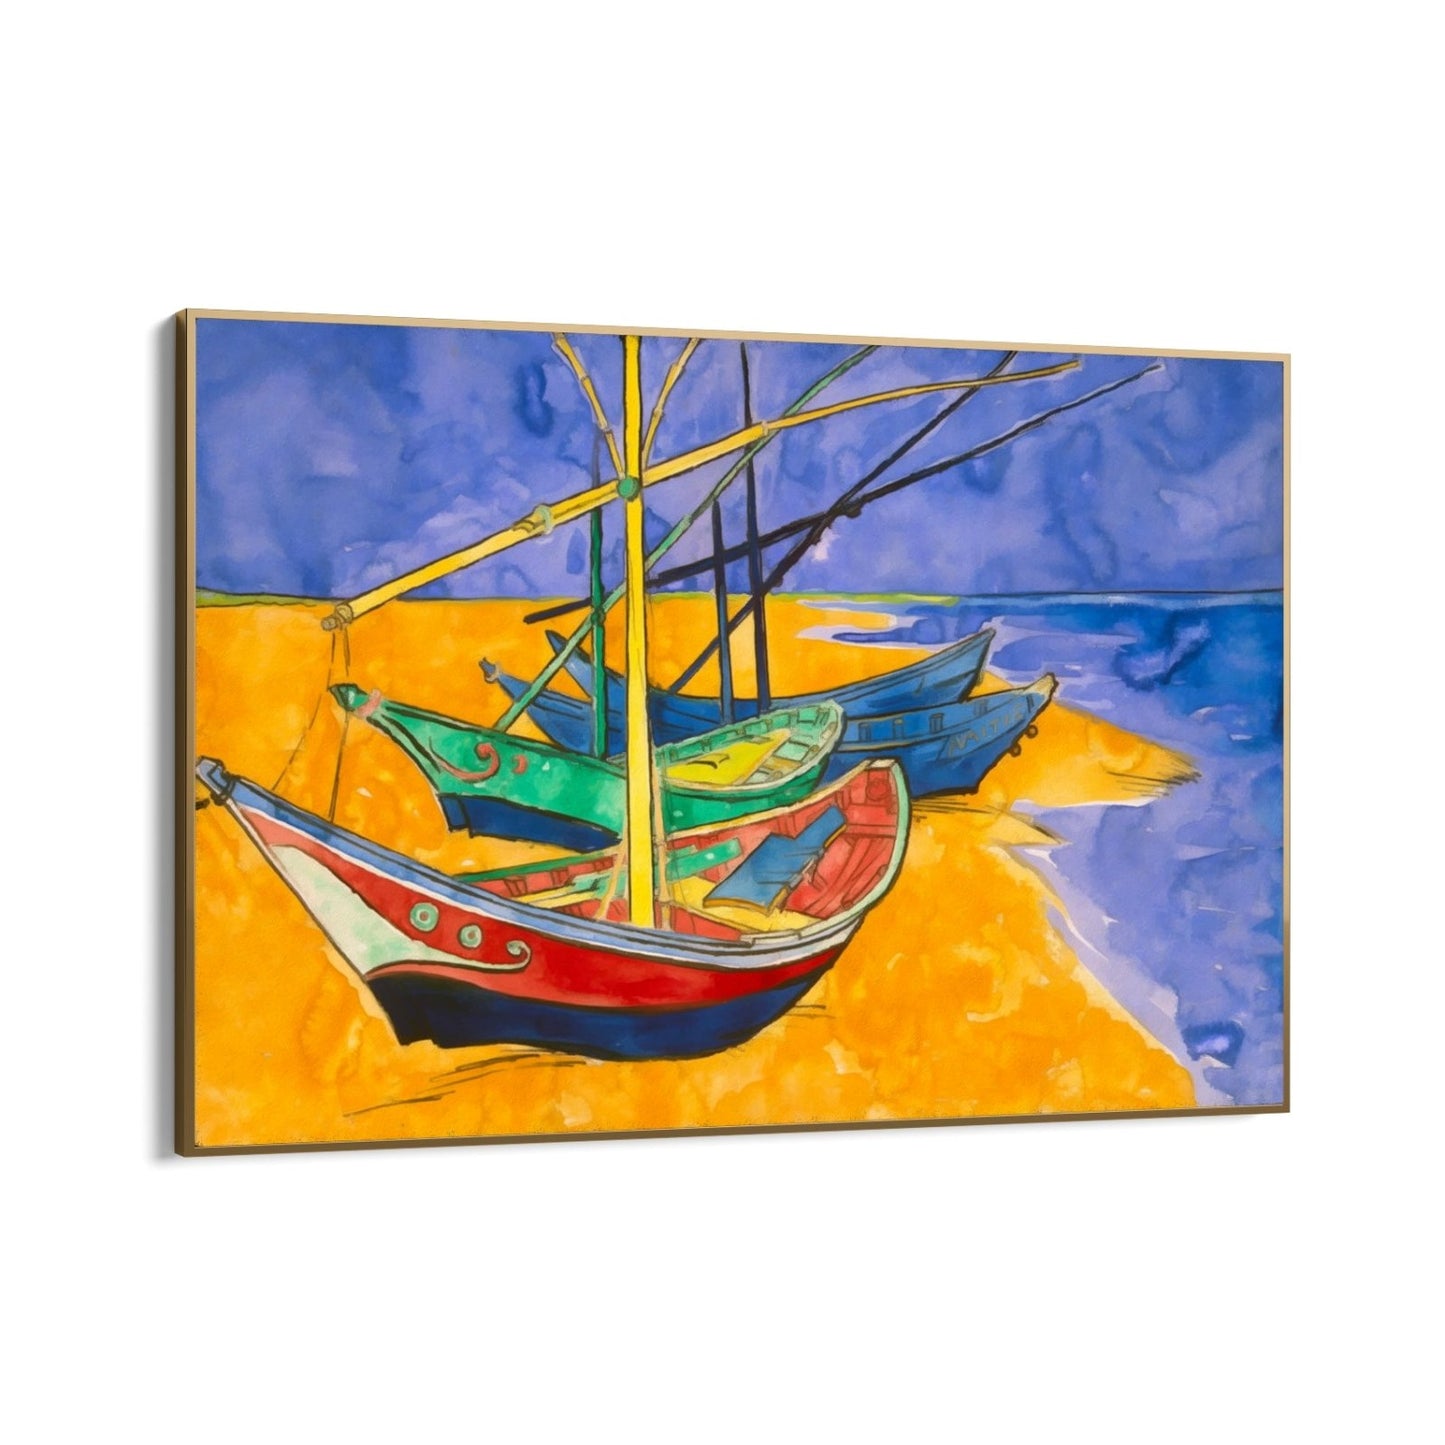 Łodzie rybackie na plaży I, Vincent Van Gogh